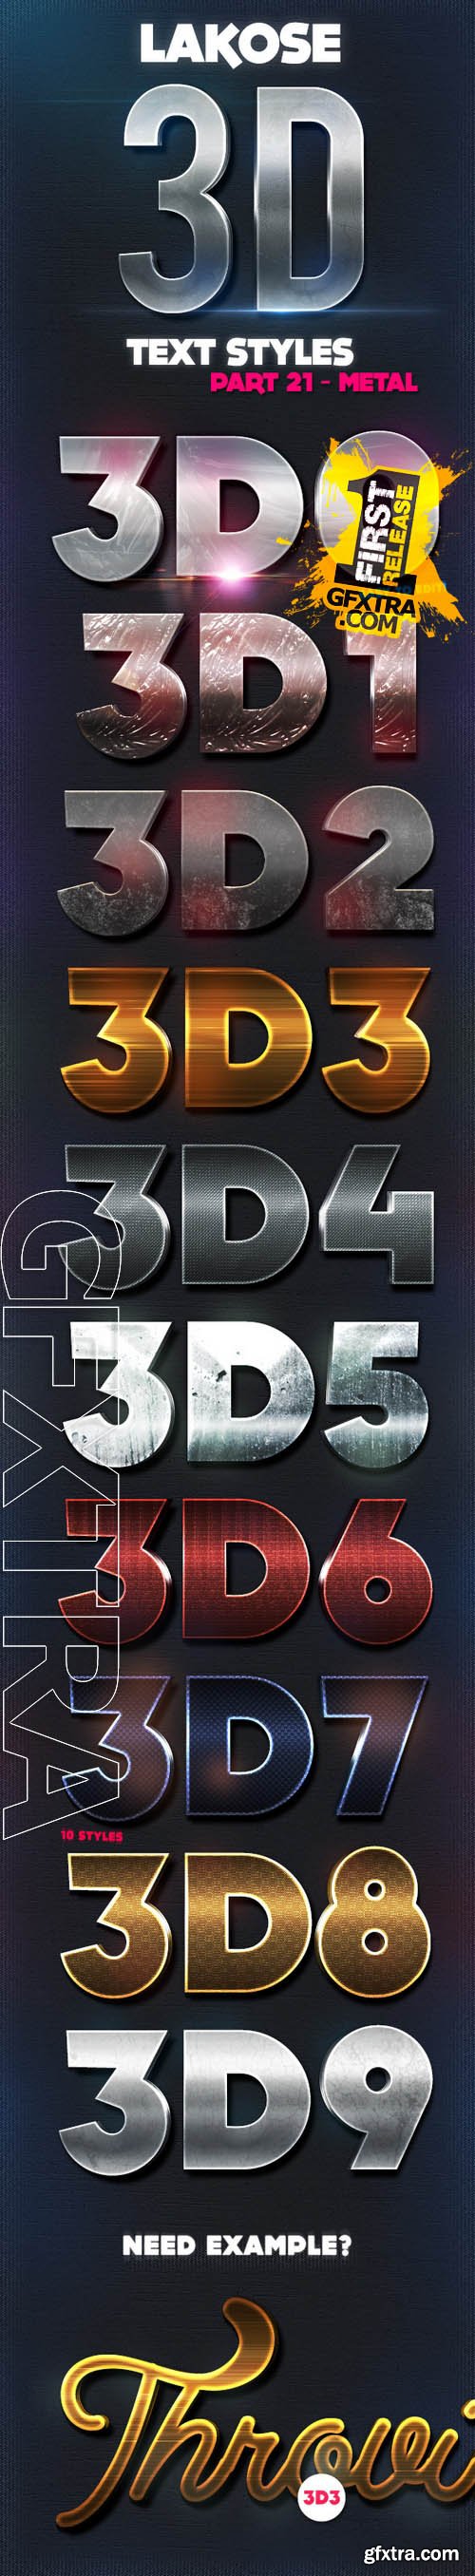 Lakose 3D Text Styles Part 21 - Graphicriver 10320240